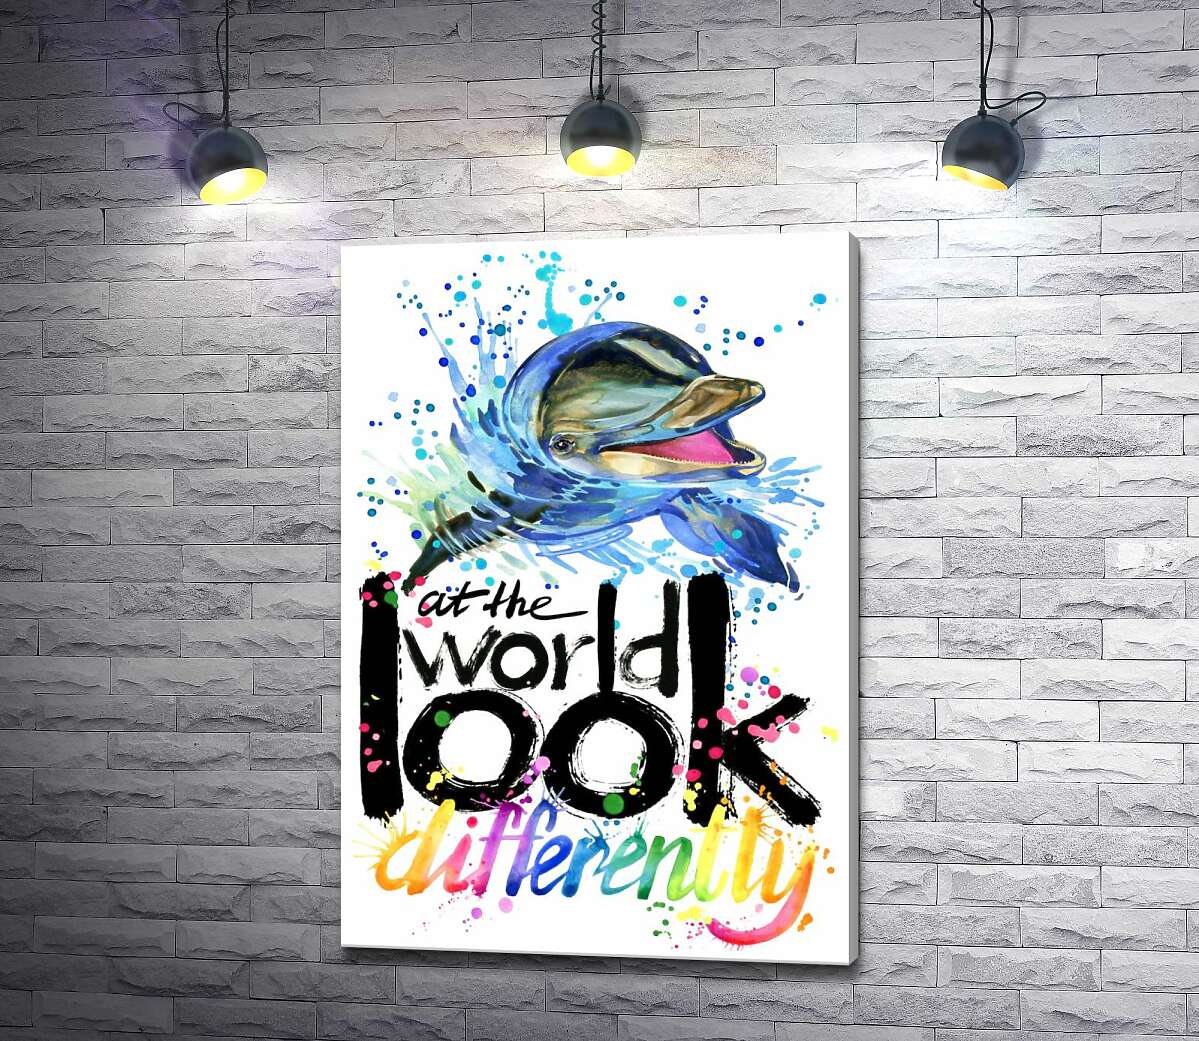 картина Веселый дельфин с надписью "look at the world differently"